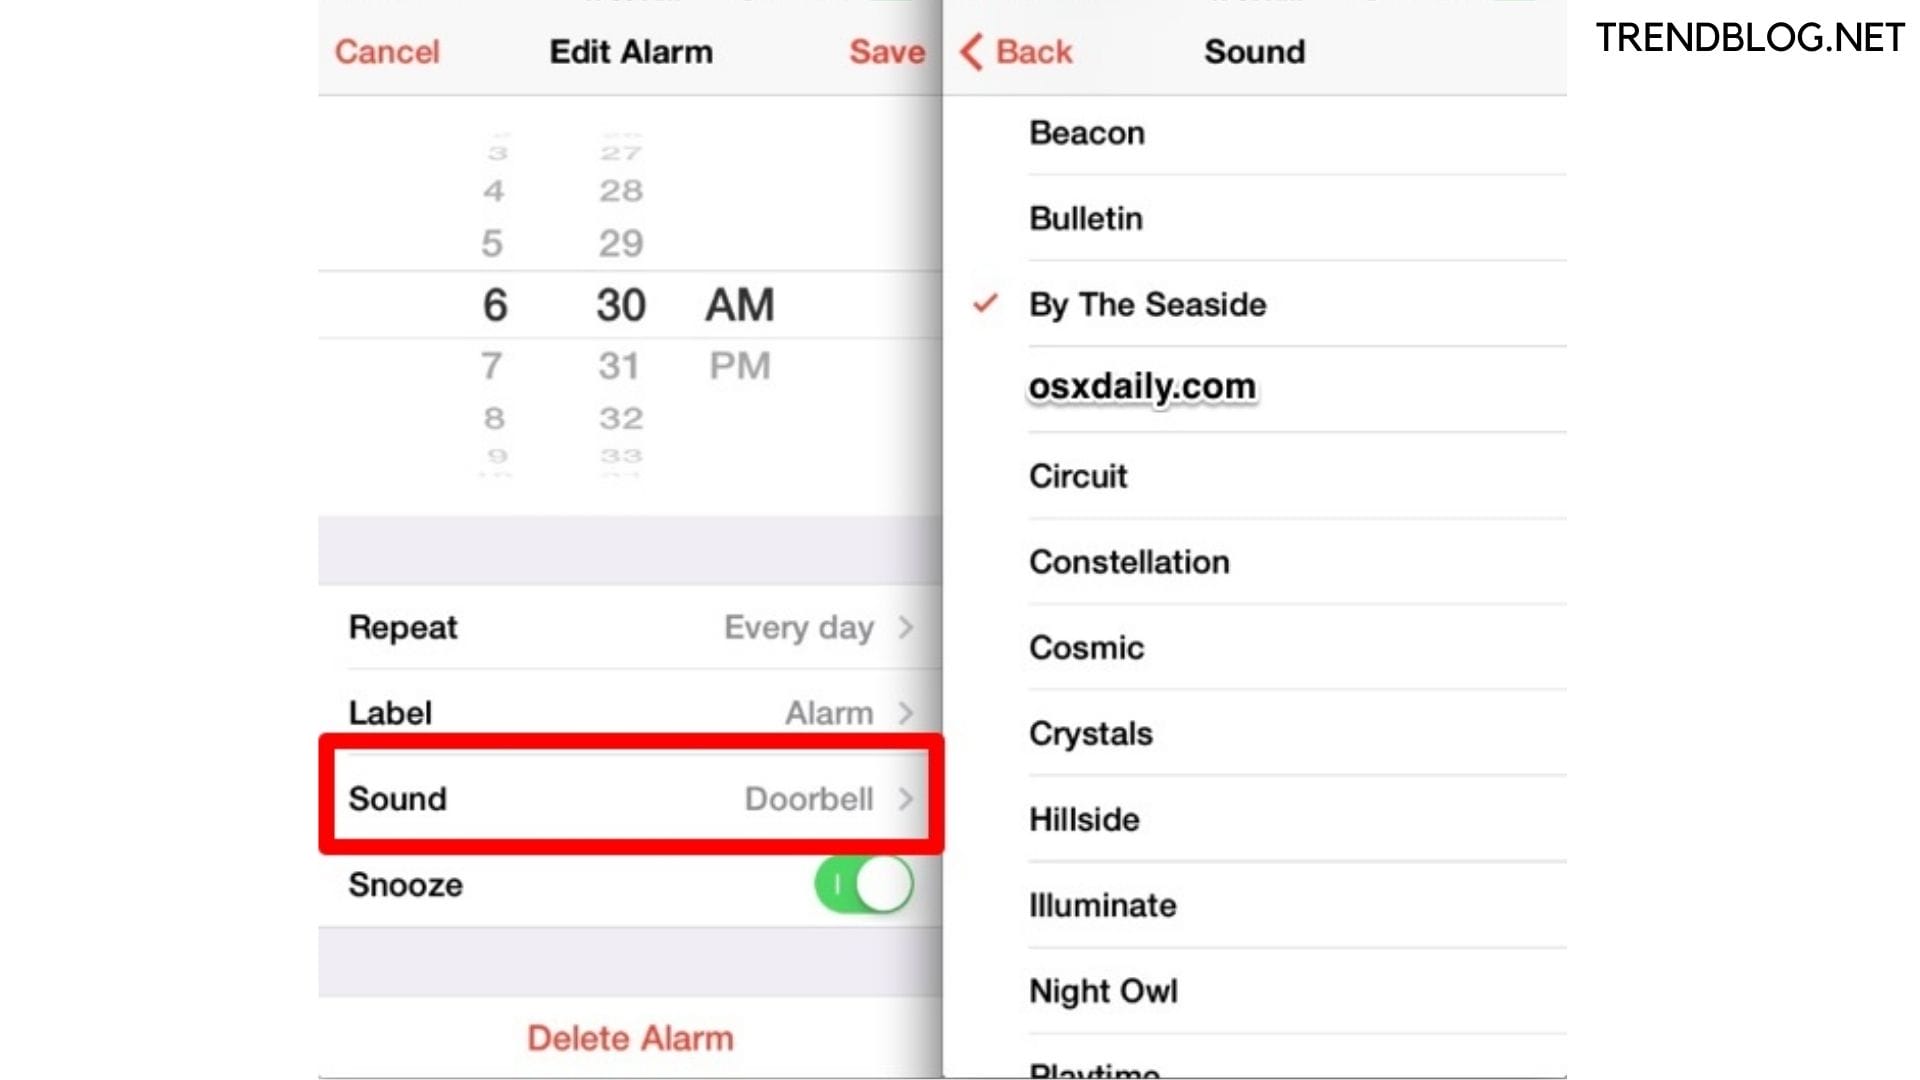 How to Change Alarm Sound on iPhone Using Effective Methods 2022